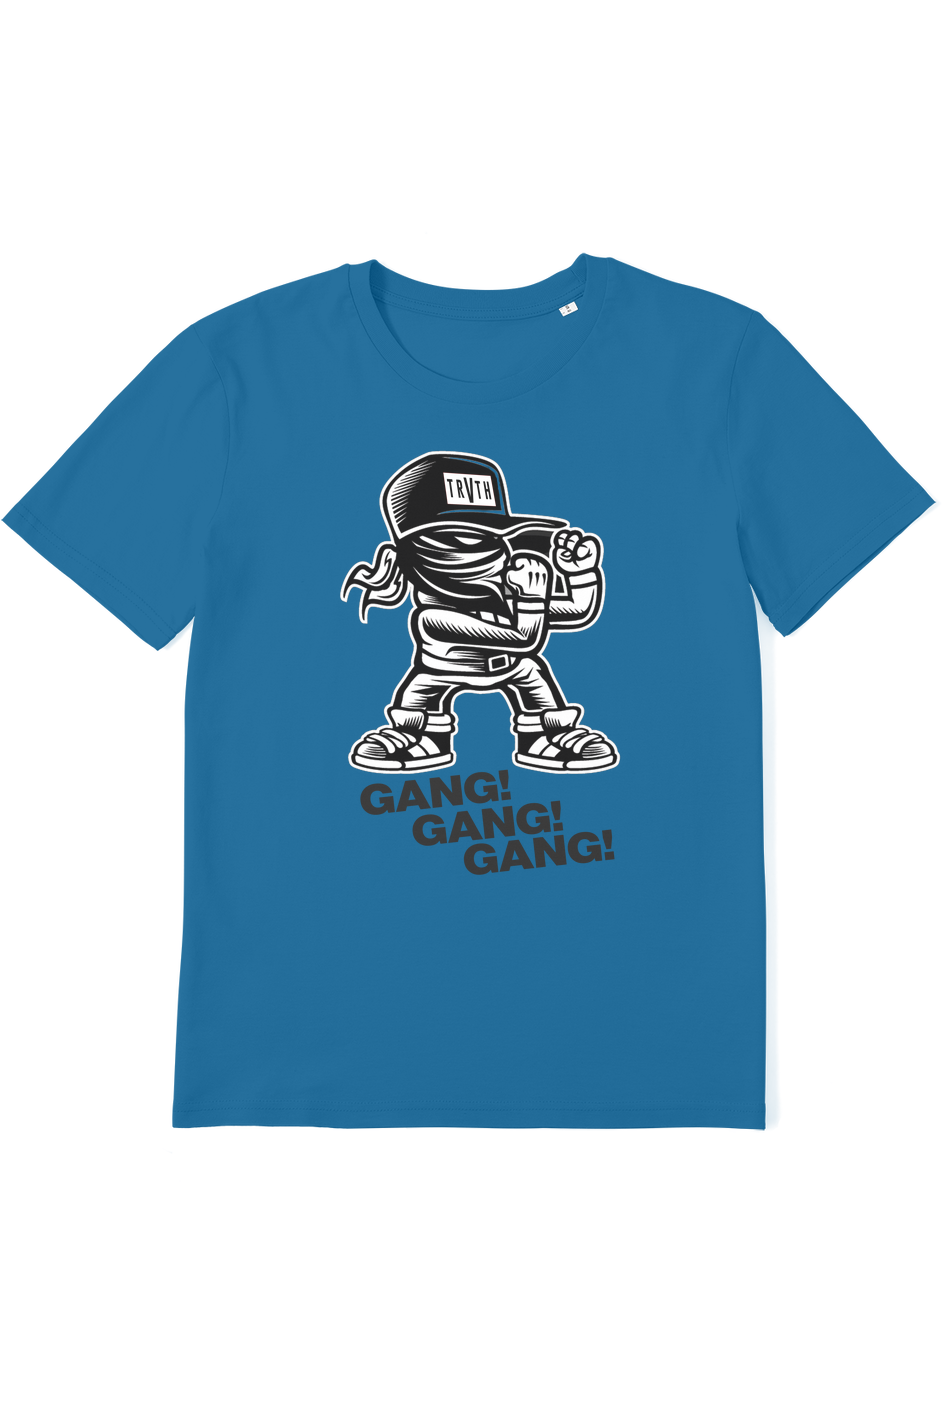 Gang Gang Gang! Organic T-Shirt vegan, sustainable, organic streetwear, - TRVTH ORGANIC CLOTHING